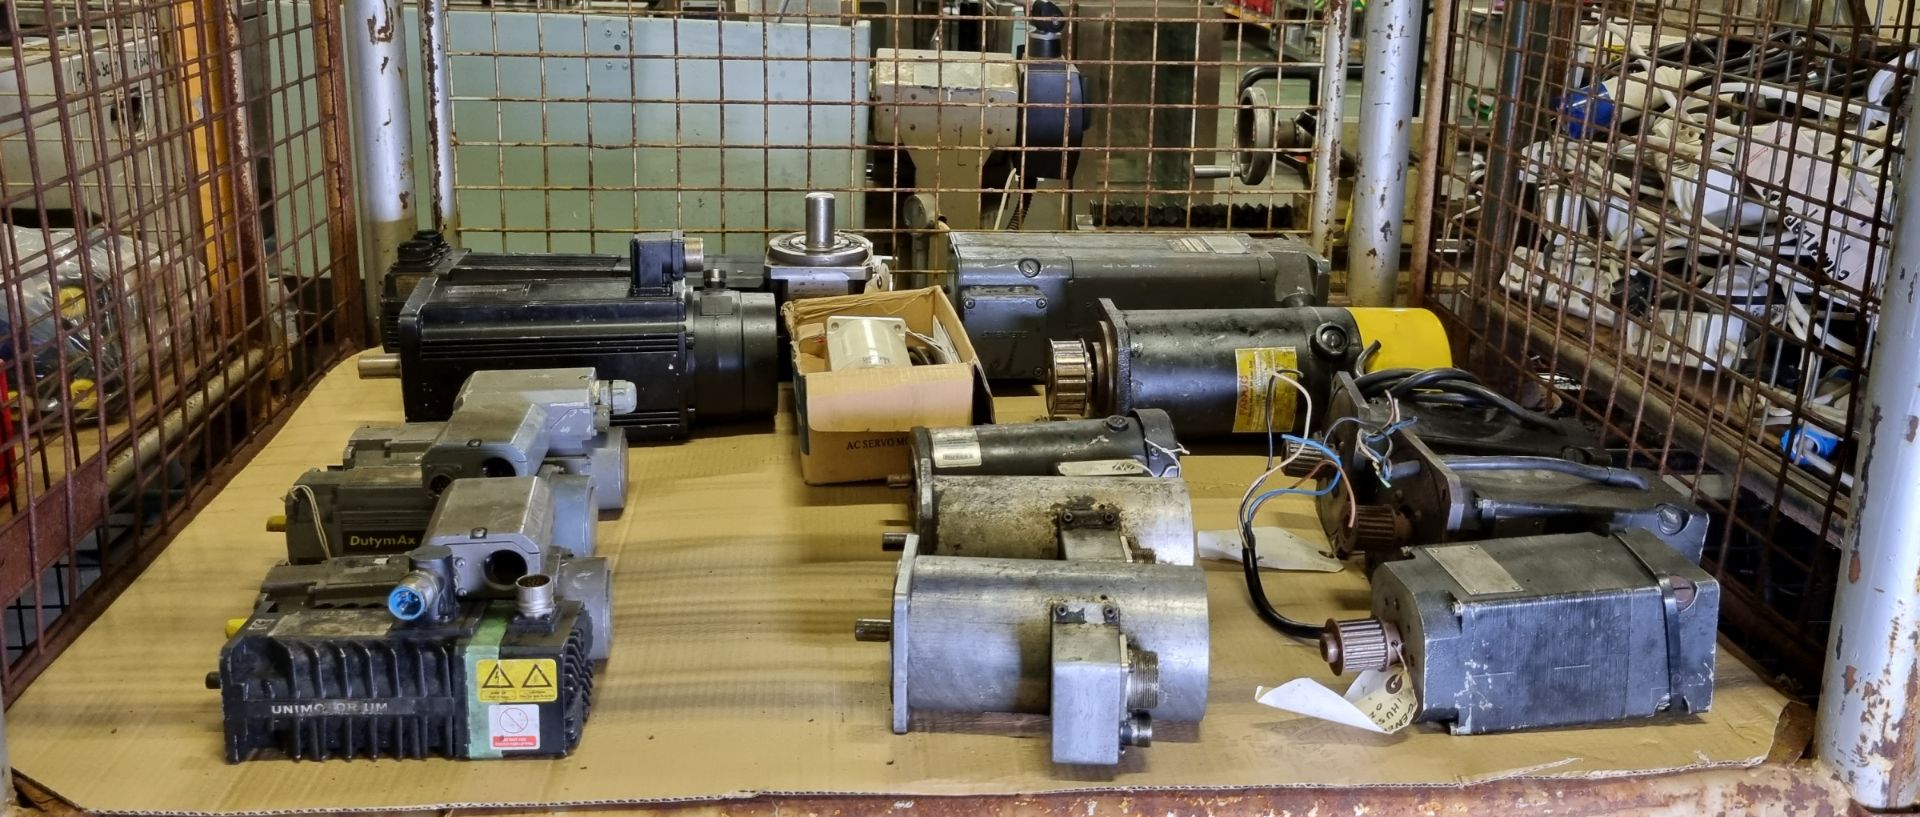 15x Permanent magnet and servo motors - various sizes